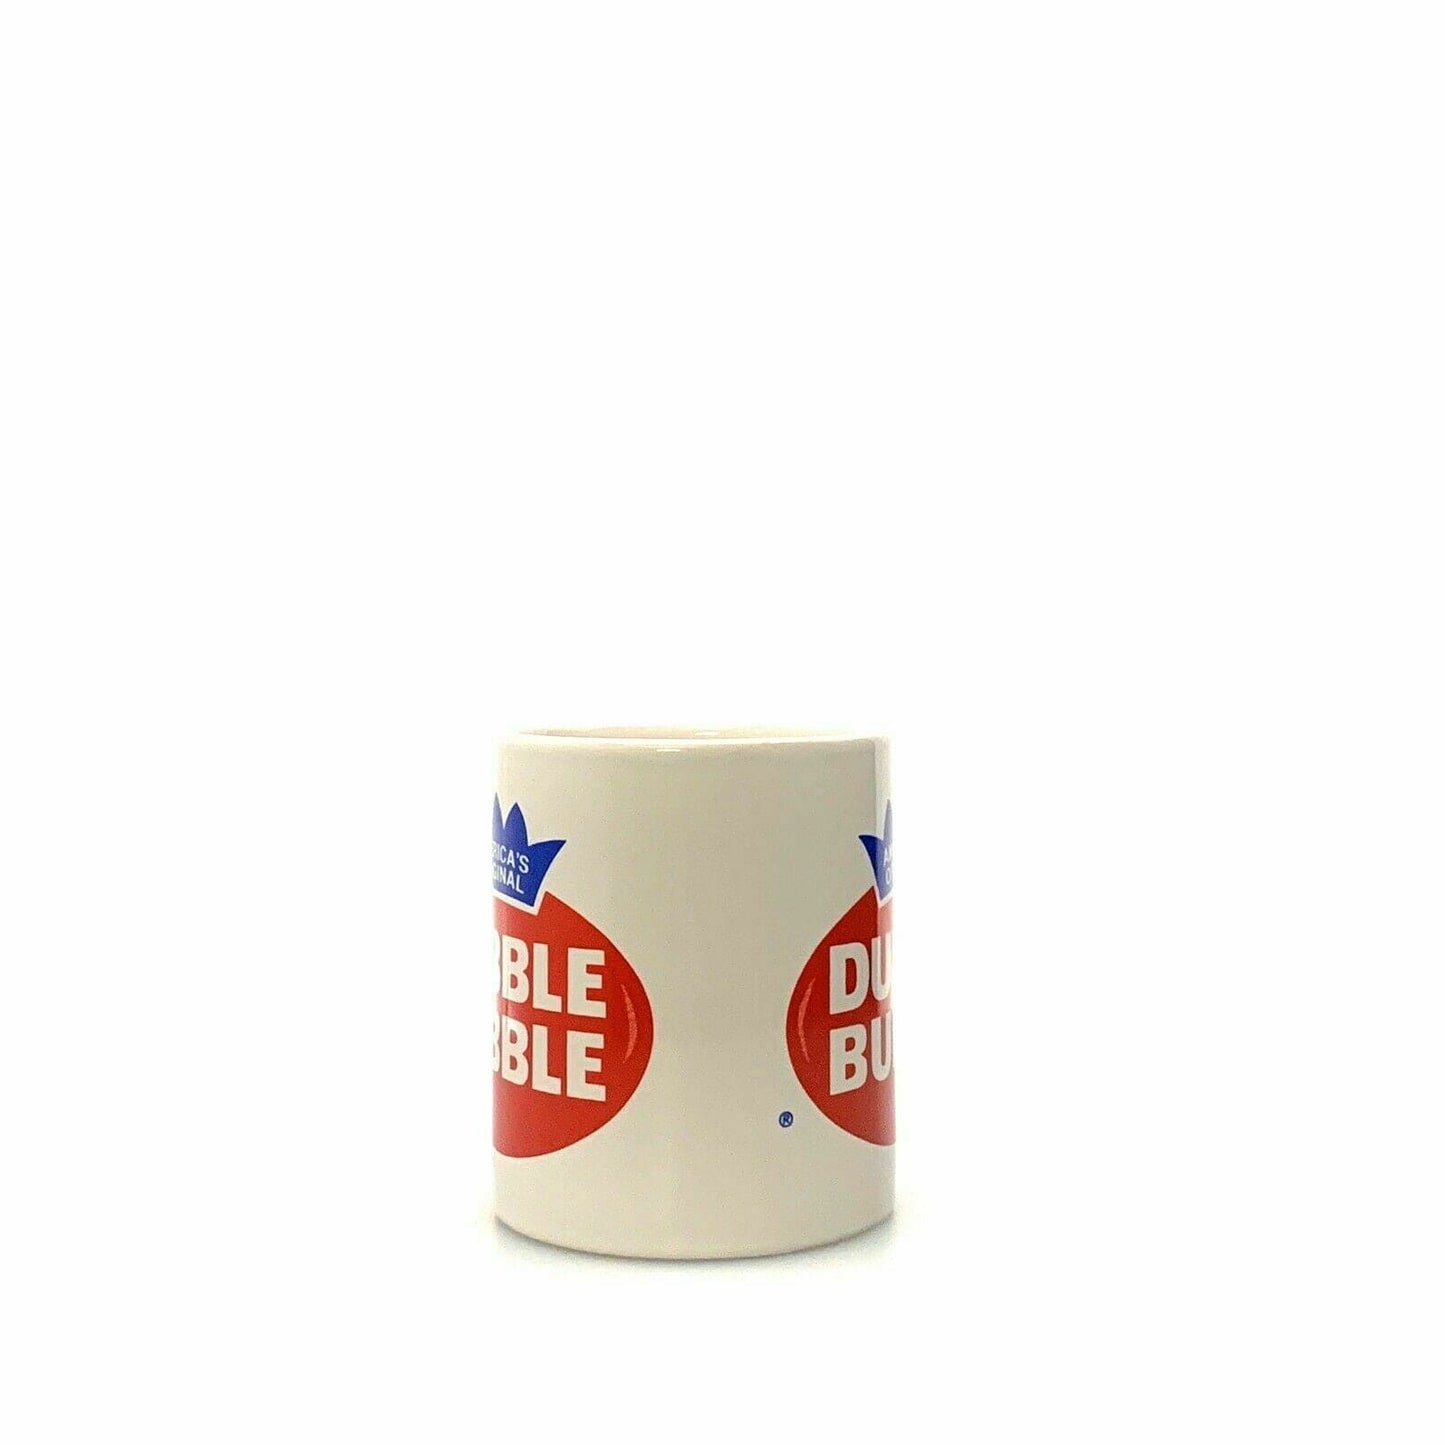 America's Original Dubble Bubble Gum Product Advertisement Coffee Tea Cup Mug